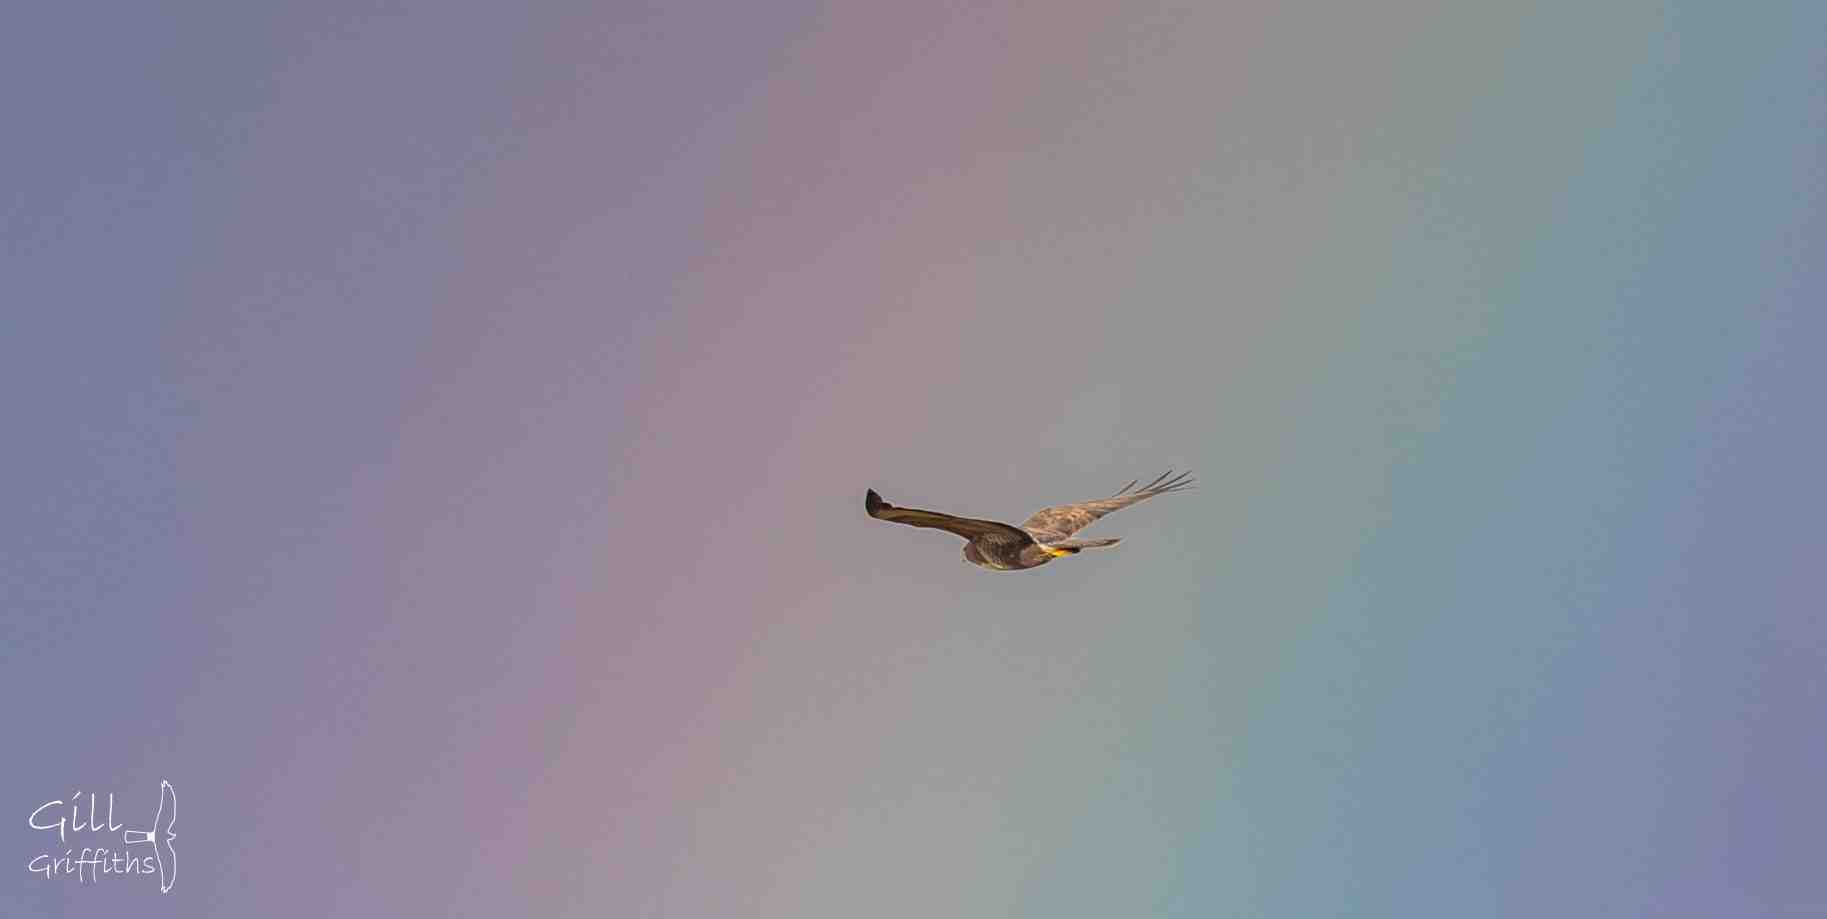 Buzzard flying into a rainbow